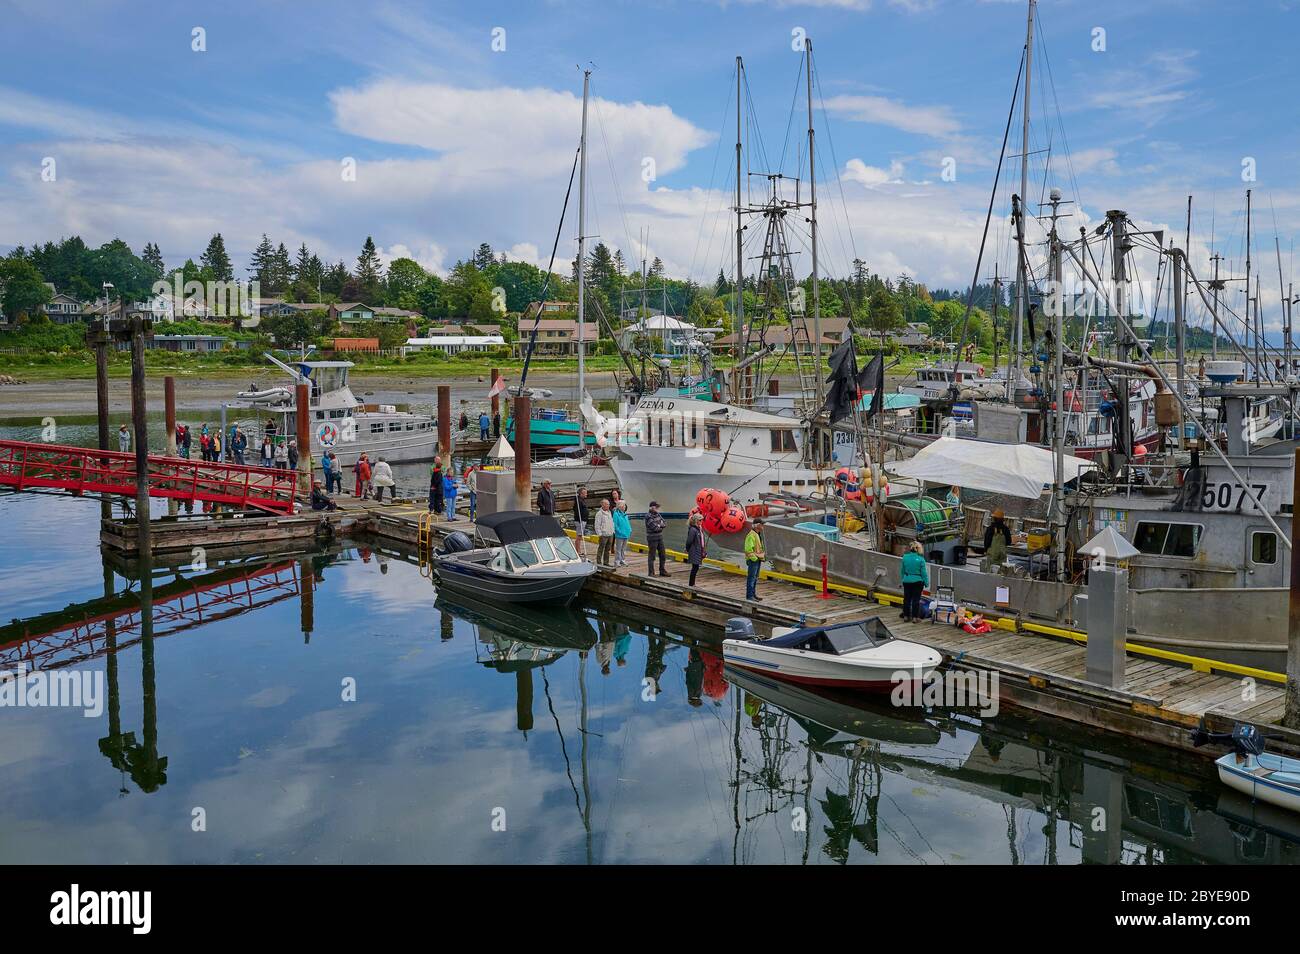 Persone in fila per halibut, Comox marina, Comox, Comox Valley, Vancouver Island, B.C Canada Foto Stock